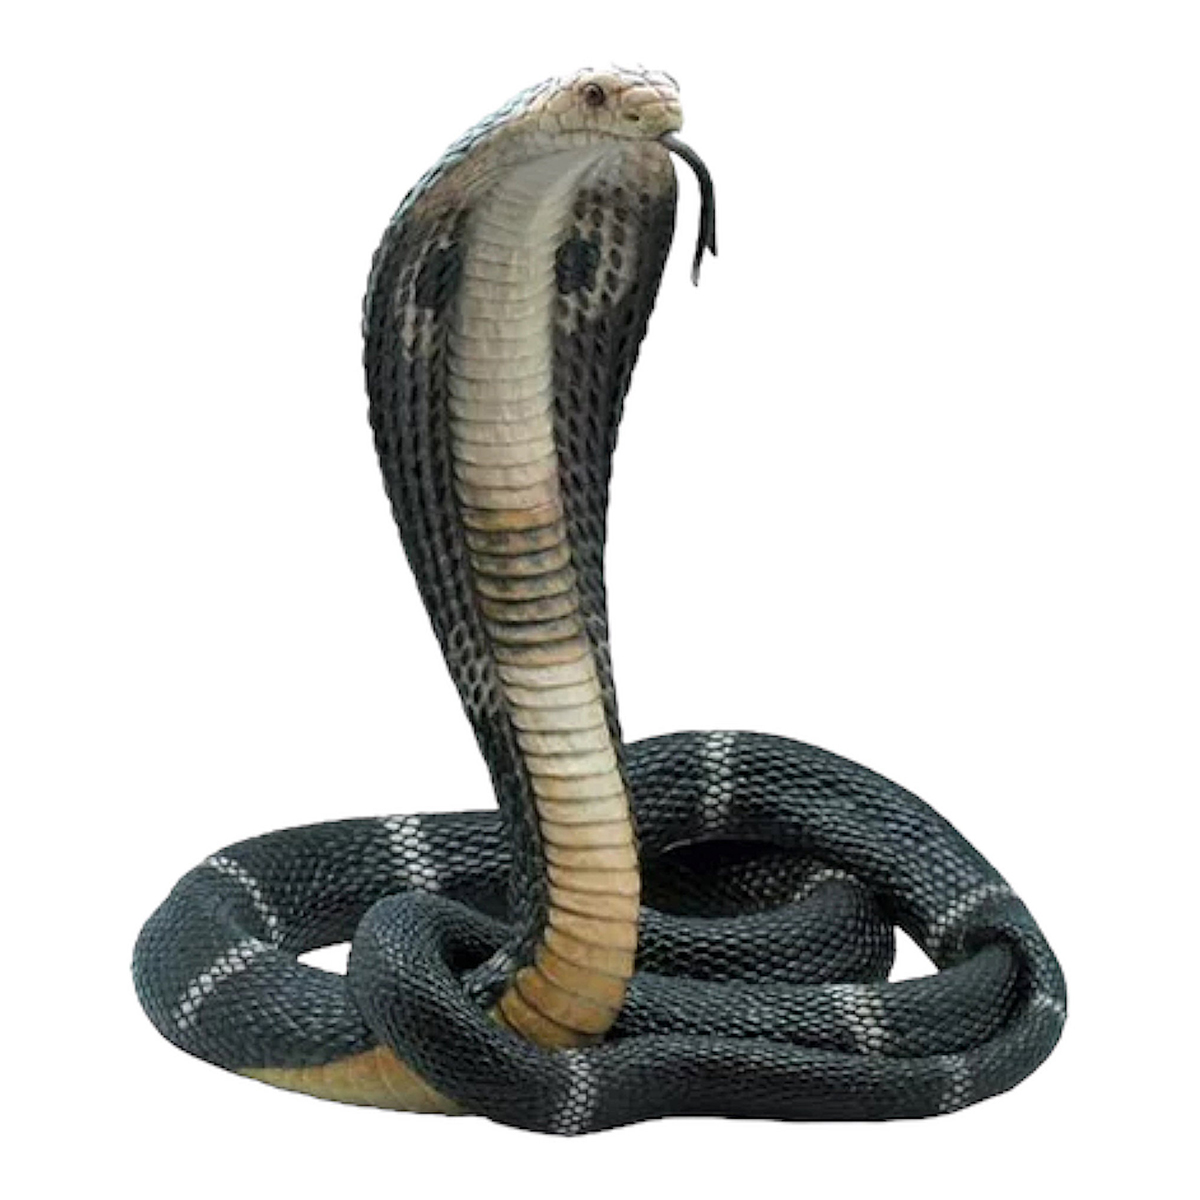 cobra snake statue